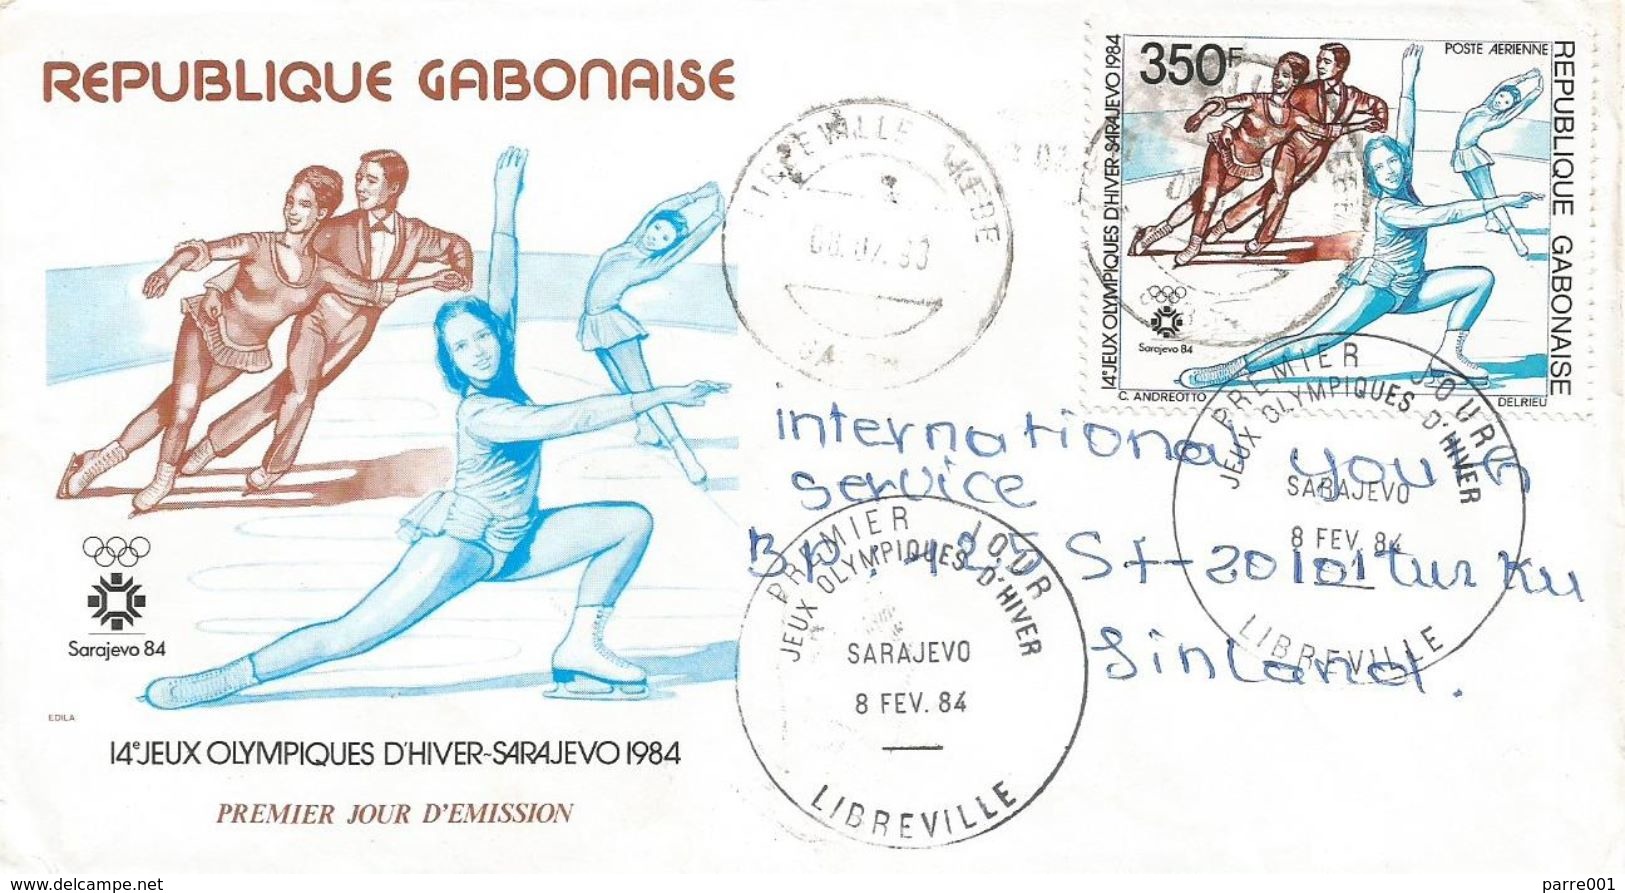 Gabon 1984 Libreville Olympic Games Sarajevo Figure Skating FDC Cover - Patinage Artistique